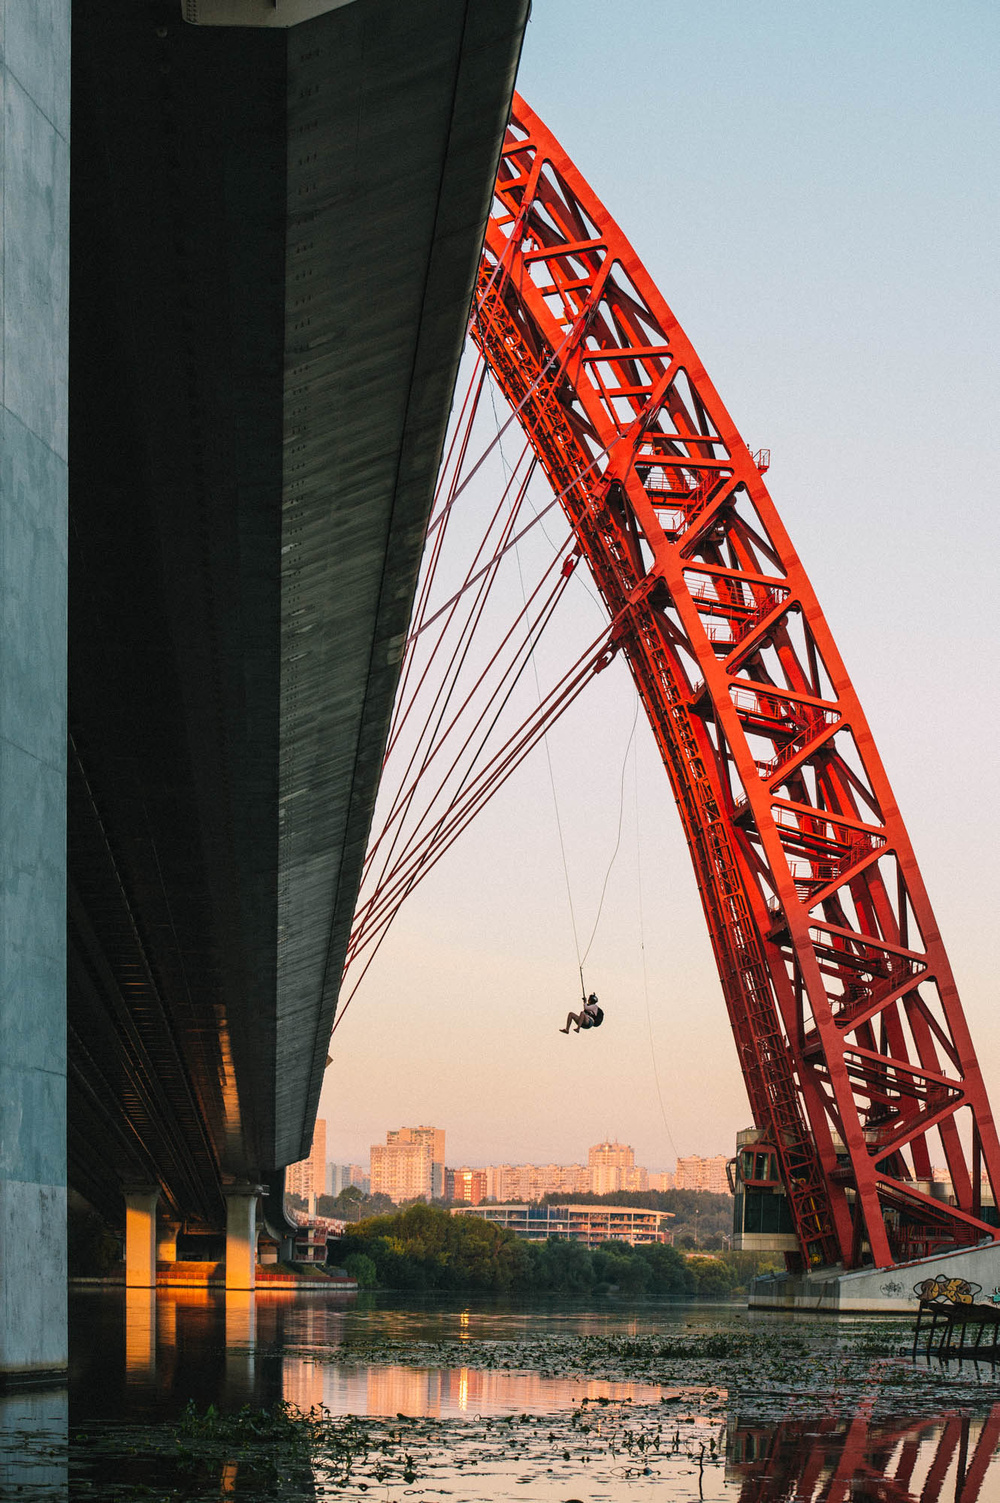 Rope jumping from Zhivopisny bridge, Moscow 2014